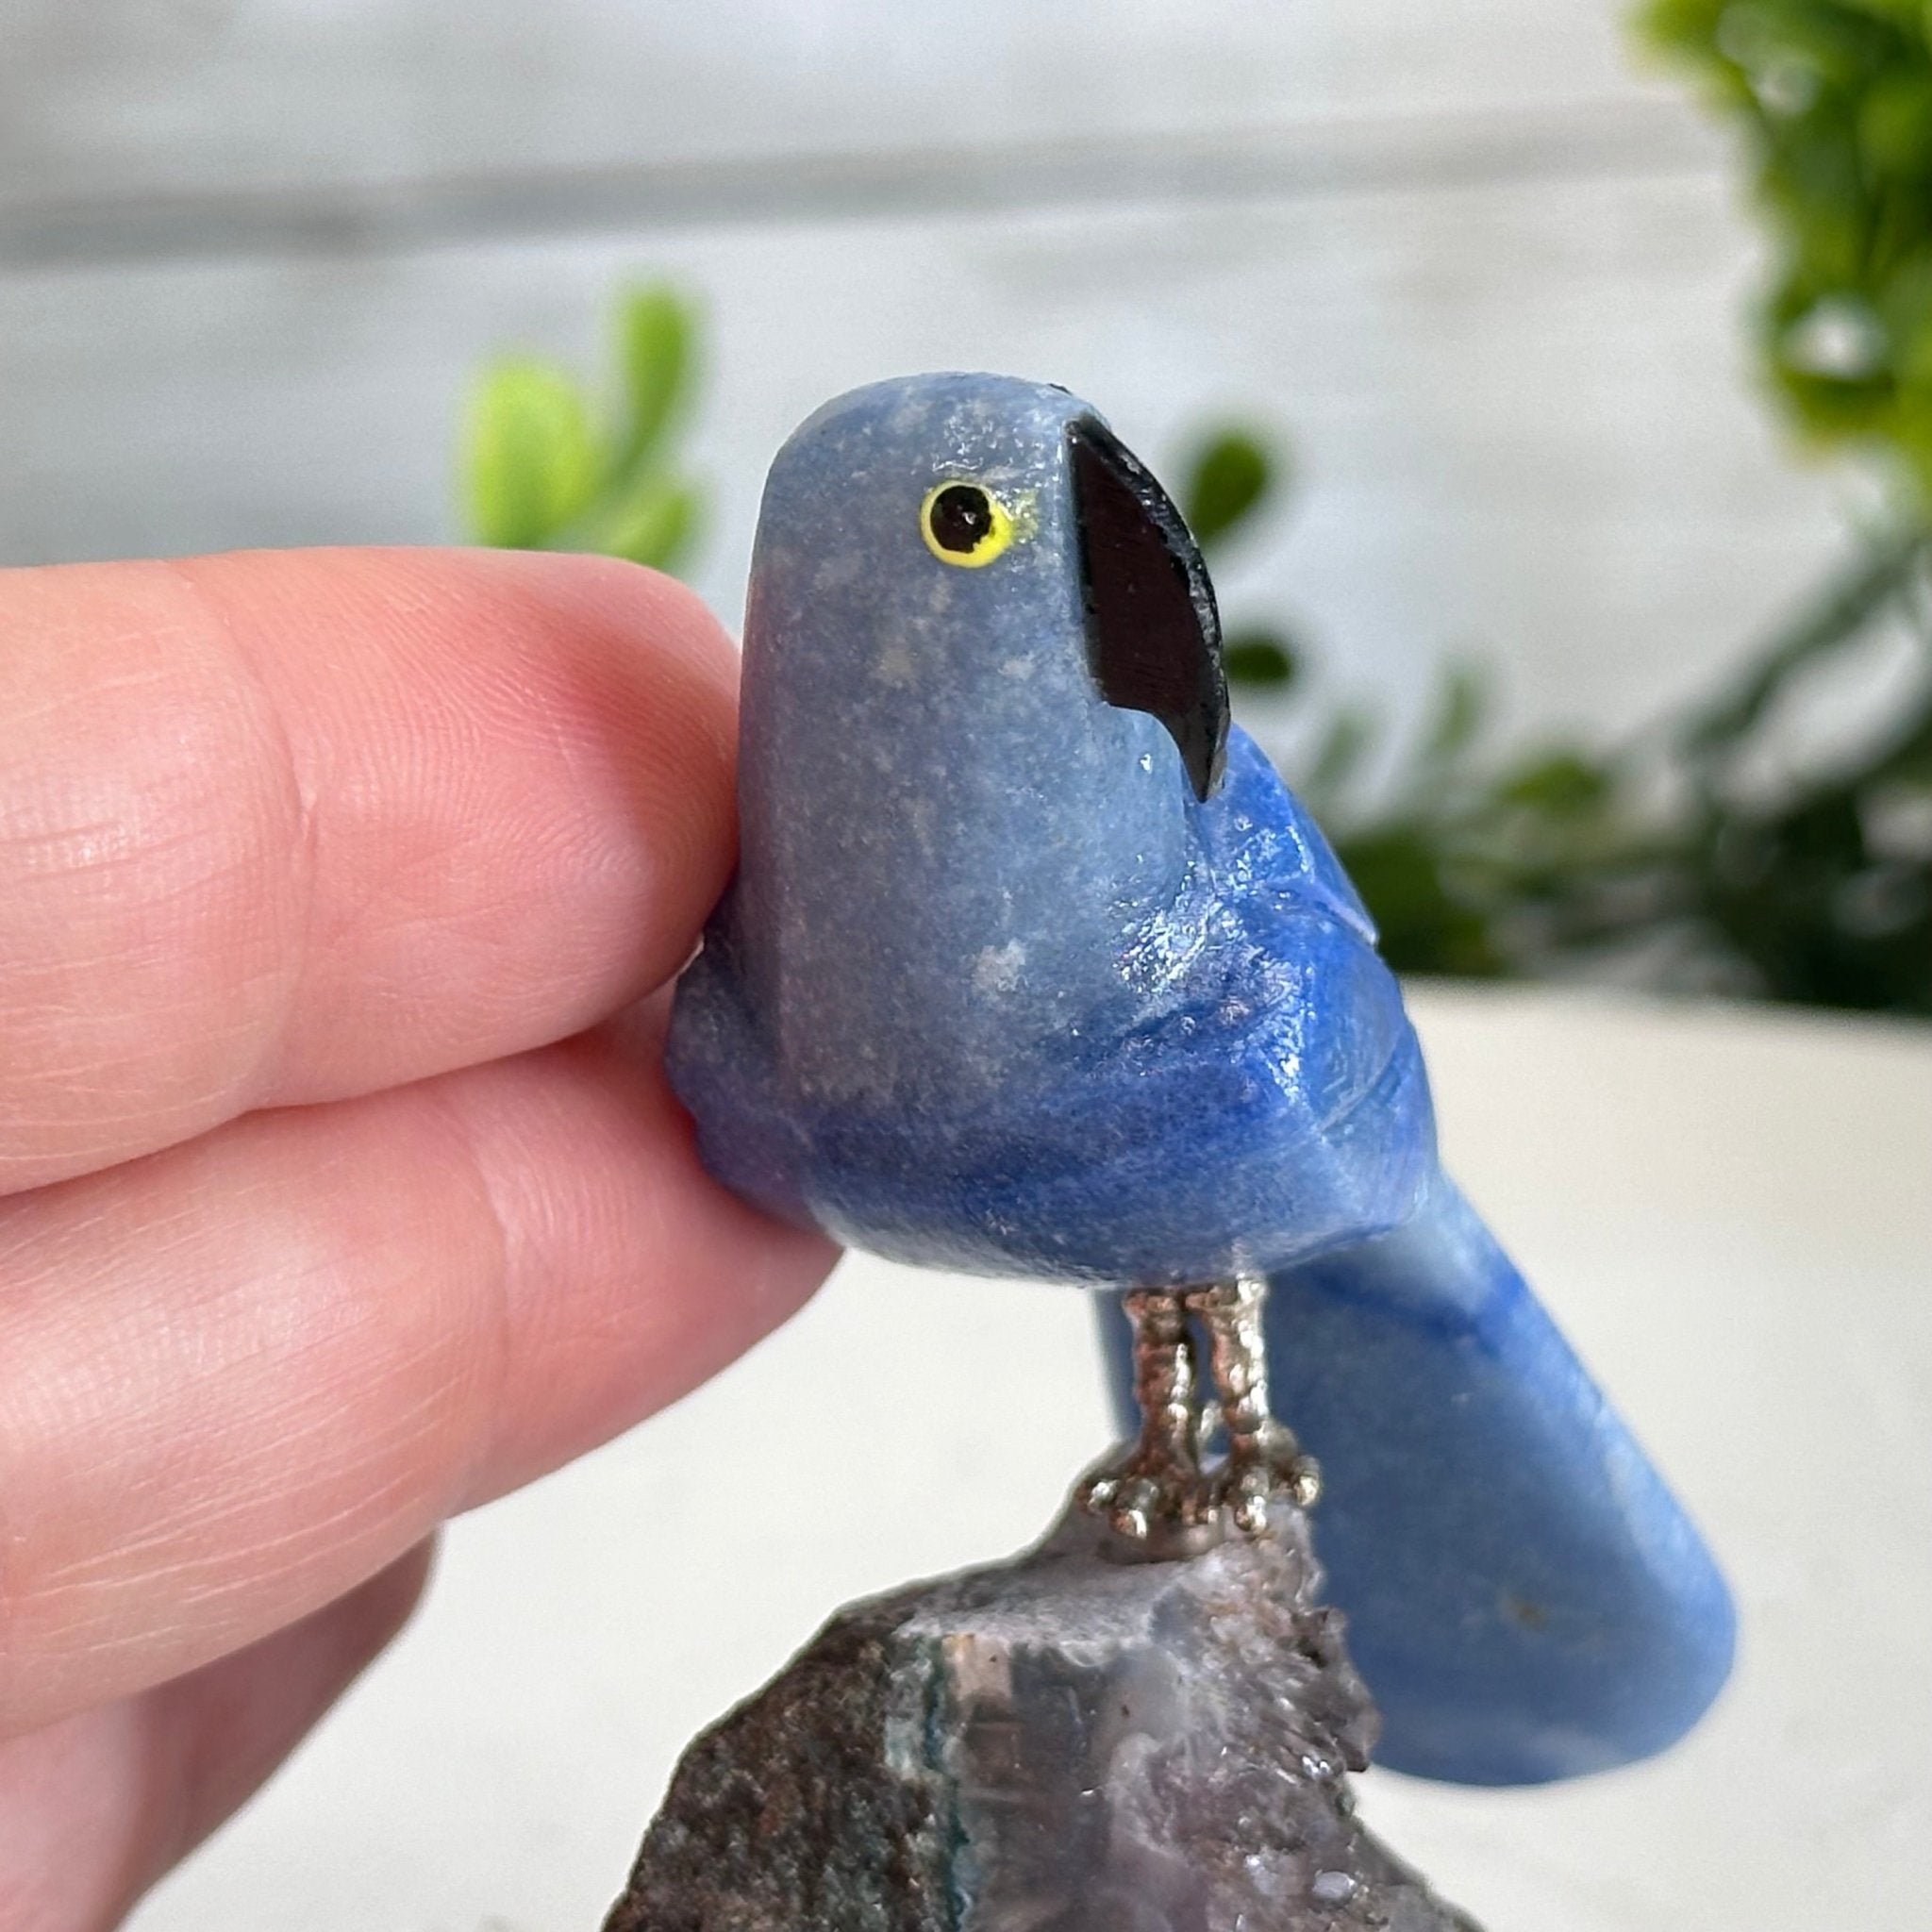 Hand-Carved Crystal Bird, Blue Quartz Parrot, Amethyst Base, 3.6" Tall #3001-BQPAM-024 - Brazil GemsBrazil GemsHand-Carved Crystal Bird, Blue Quartz Parrot, Amethyst Base, 3.6" Tall #3001-BQPAM-024Crystal Birds3001-BQPAM-024